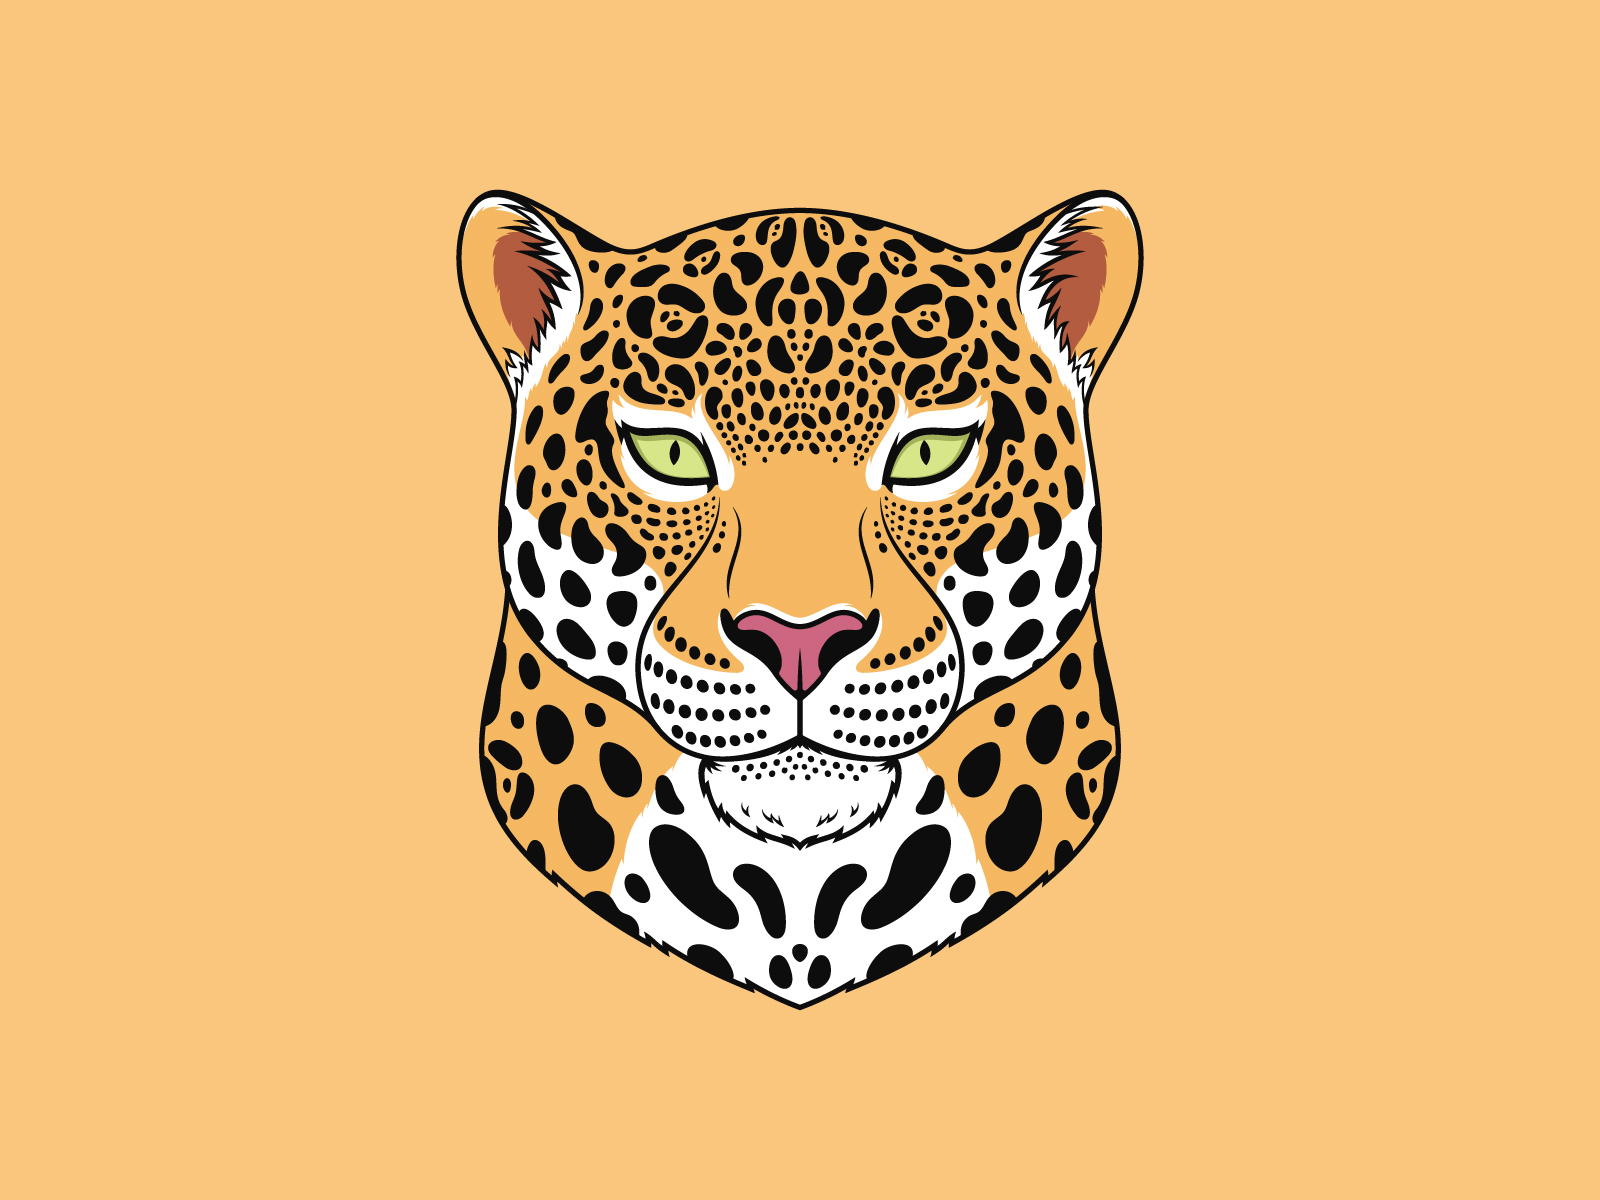 Jaguar Cat by Dmitry Mayer on Dribbble